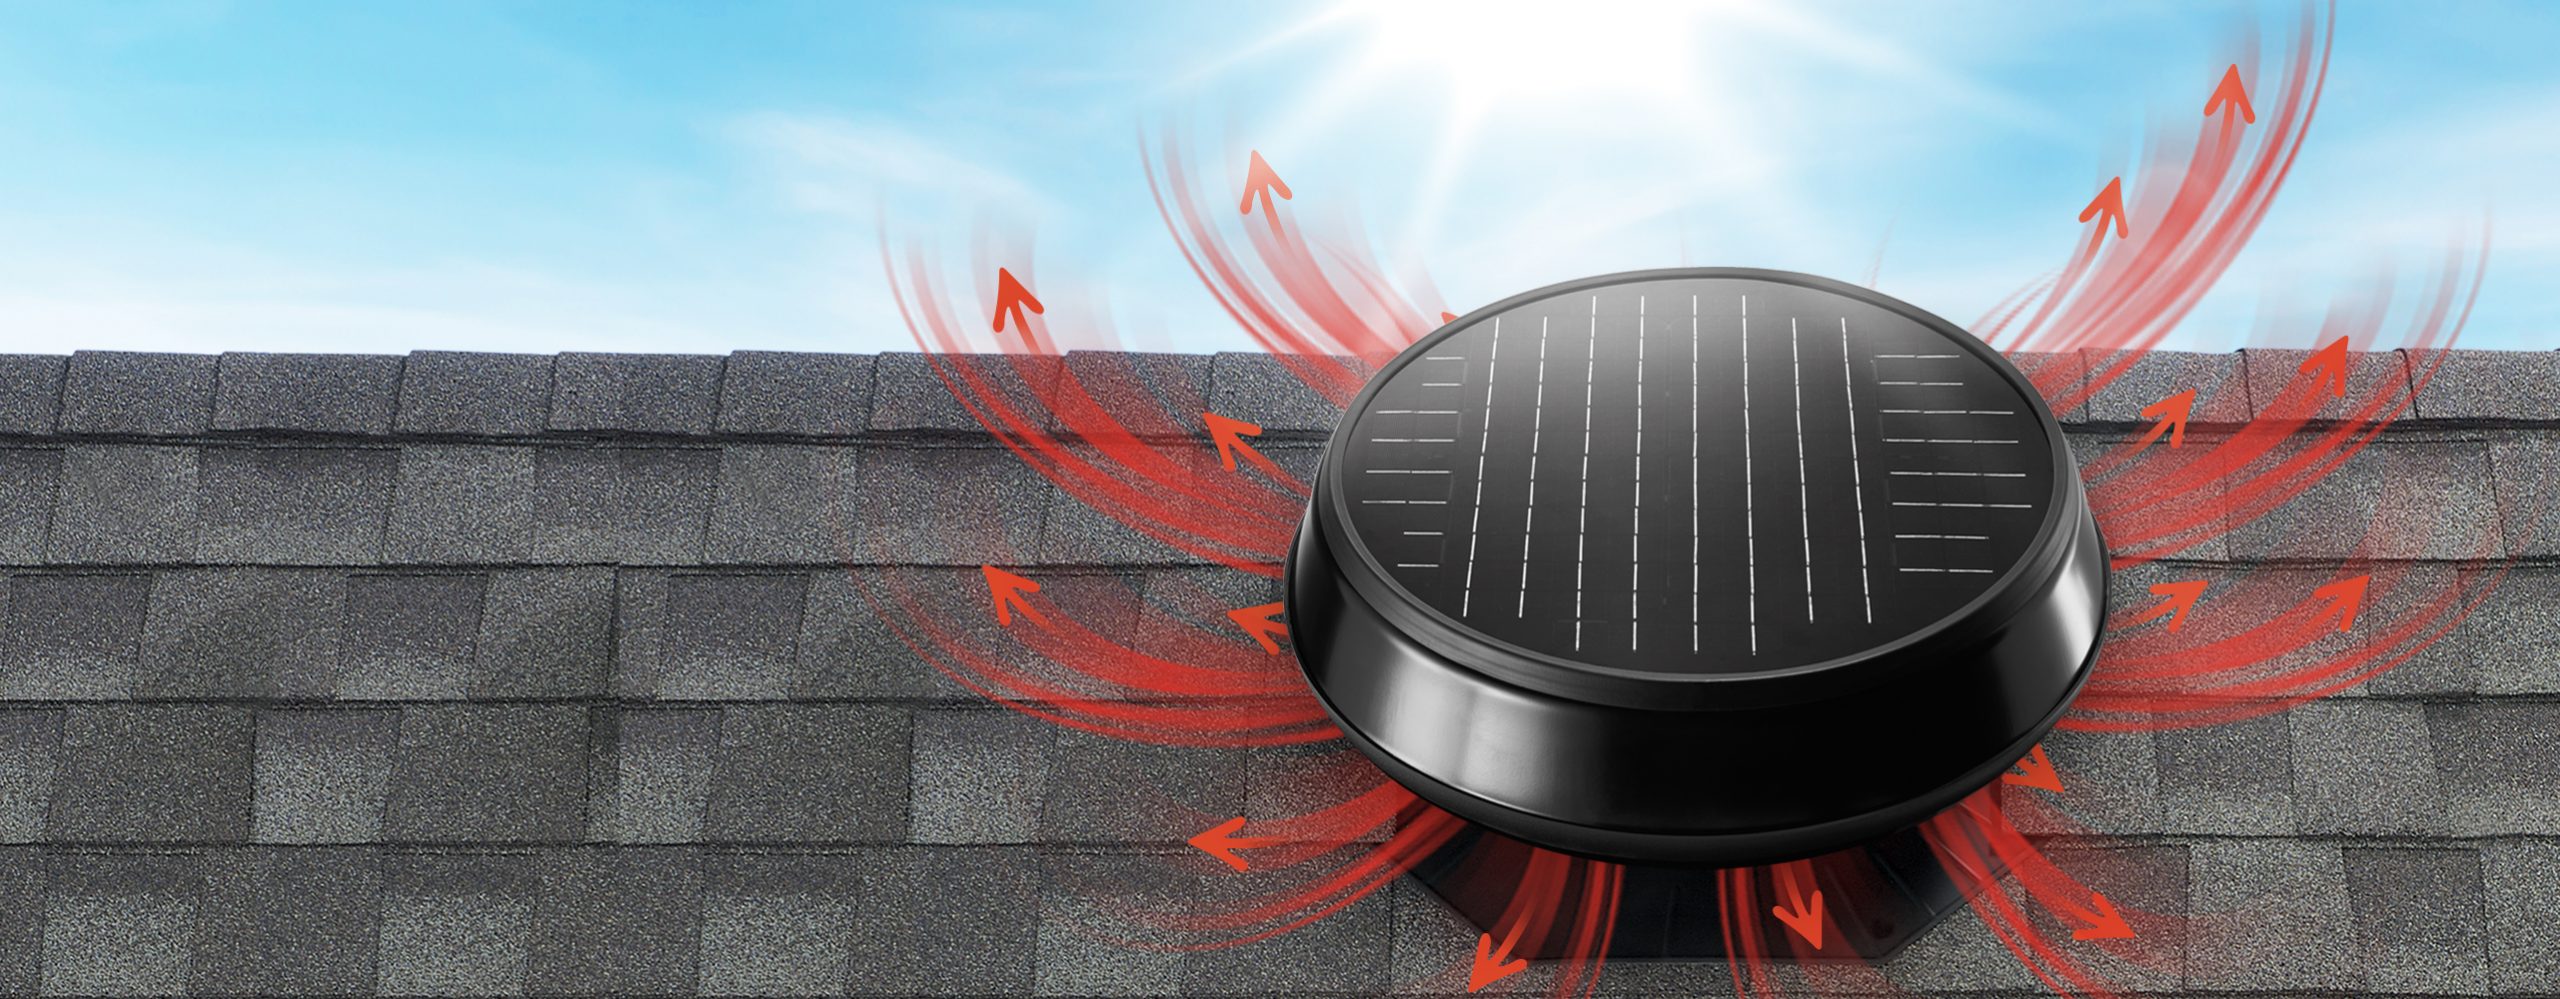 Solar-Powered Attic Roof Ventilation Fans